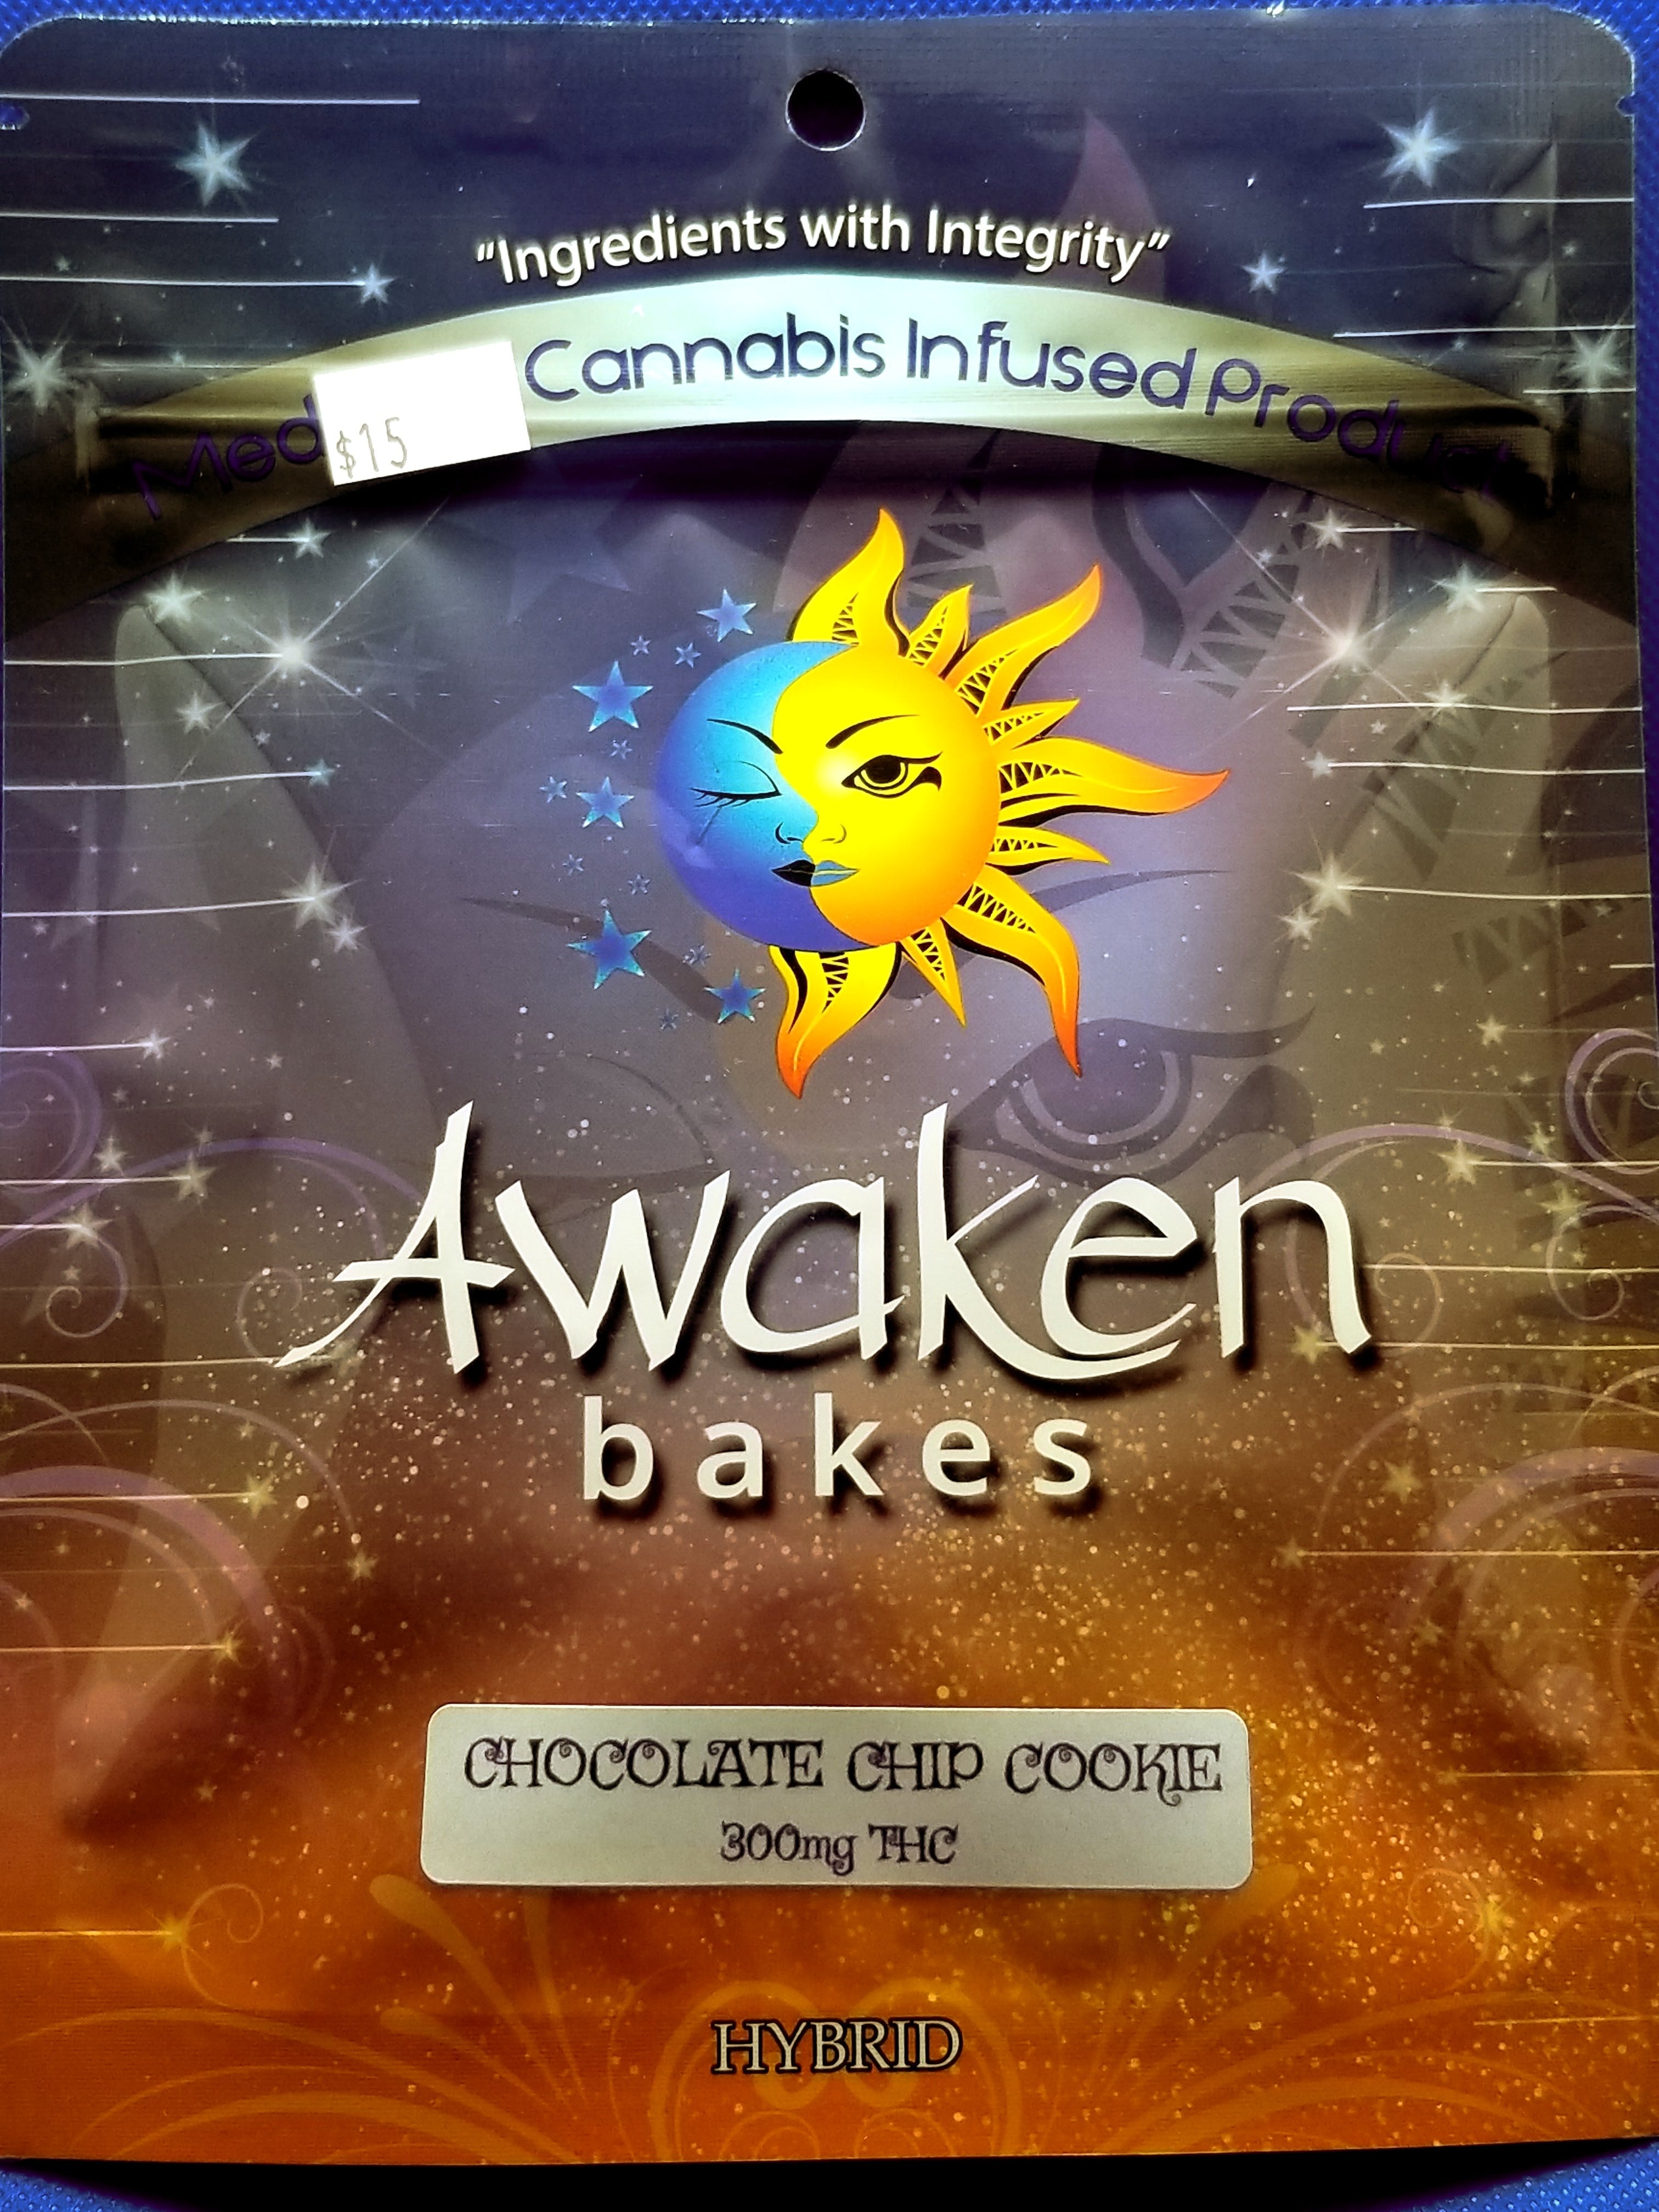 marijuana-dispensaries-1609-east-chapman-ave-orange-awaken-bakes-chocolate-chip-cookie-300mg-hybrid